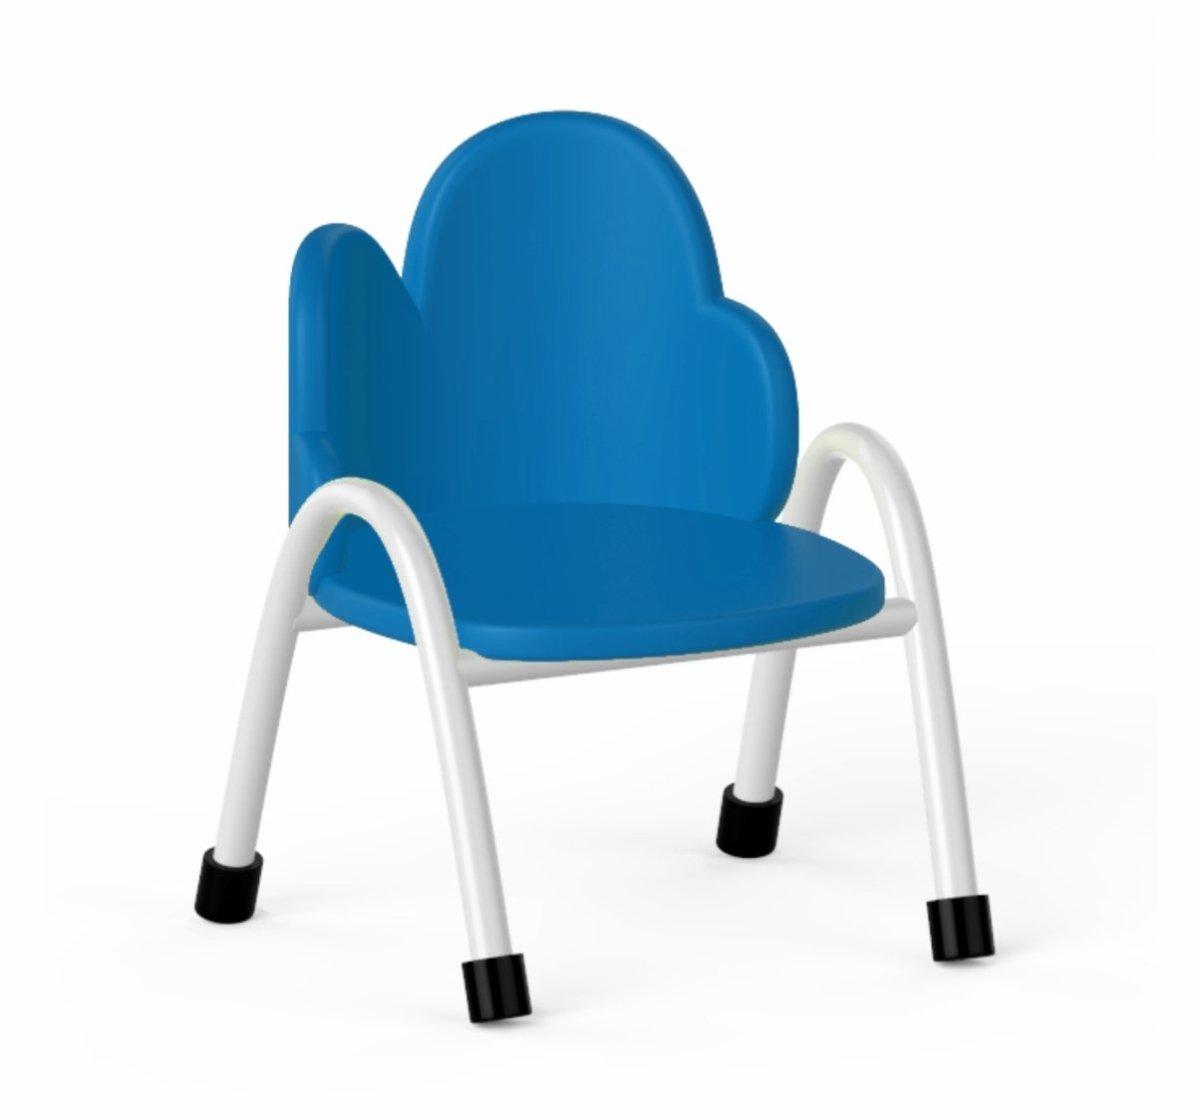 OK Play Cloud Chair - Blue - FTFF000437